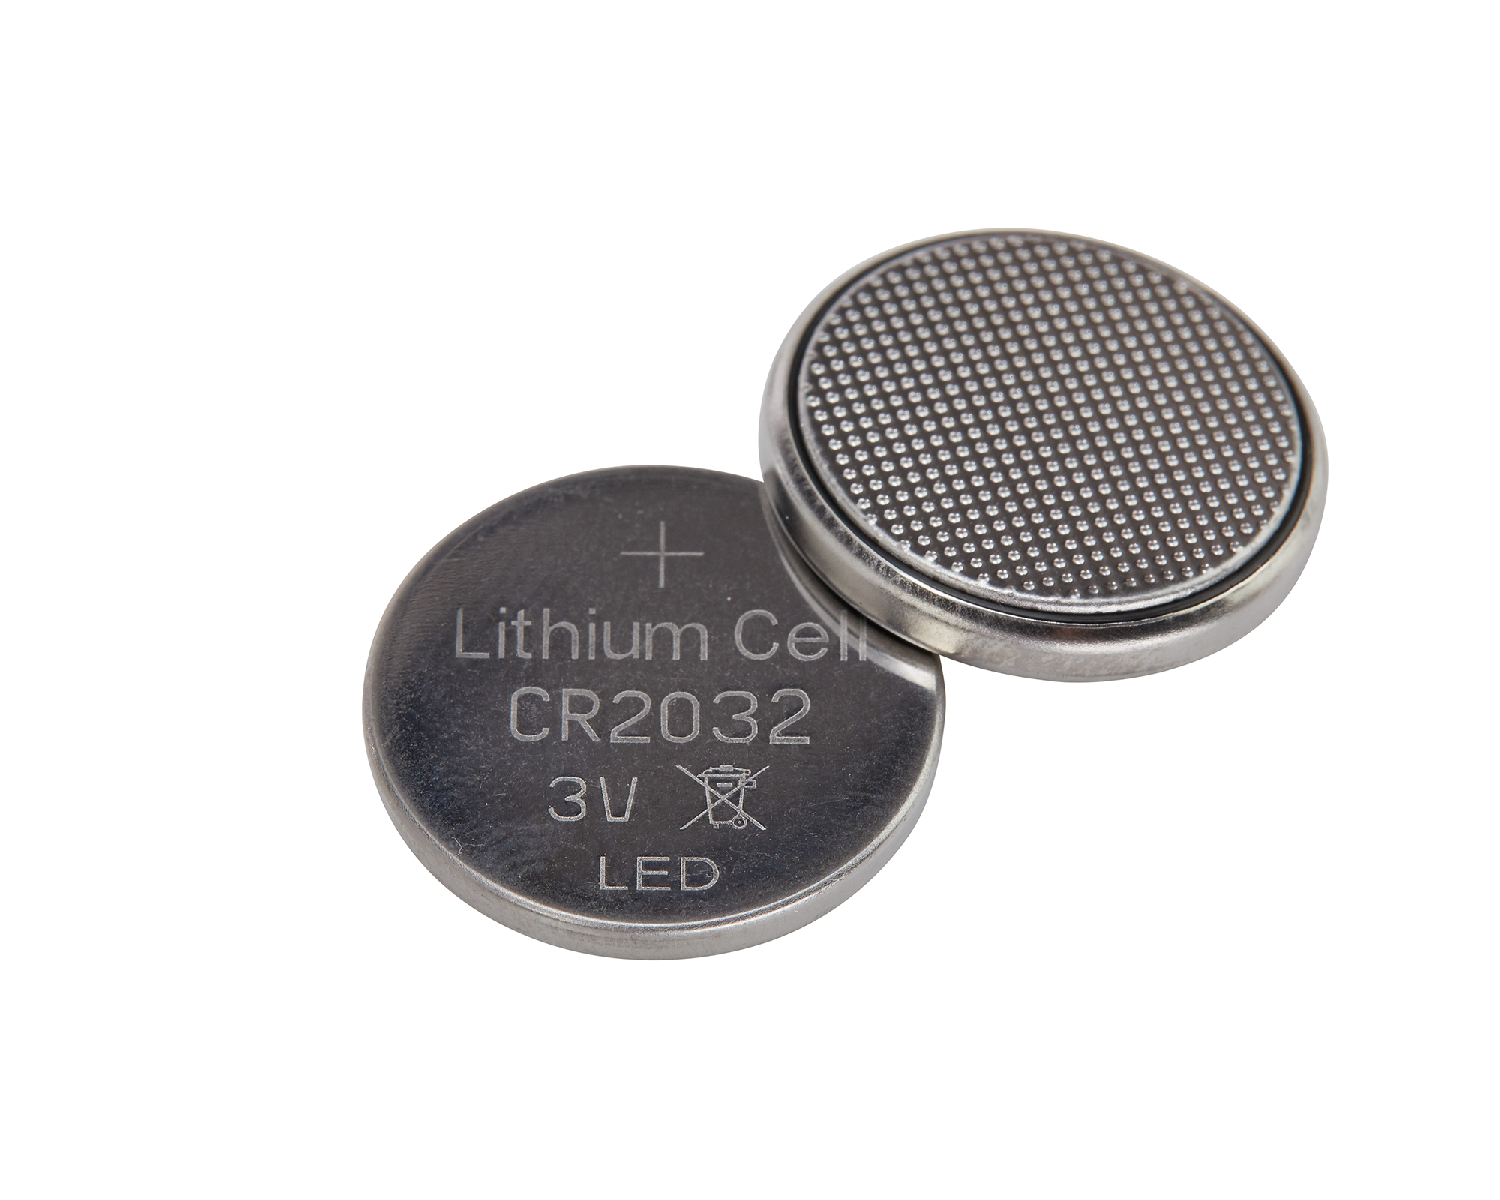 Lithium Battery cr2032 3v. Батарейка таблетка 3v cr2032. Батарейка cr2032 (3v). Батарейки Lithium Cell cr2032 3v.